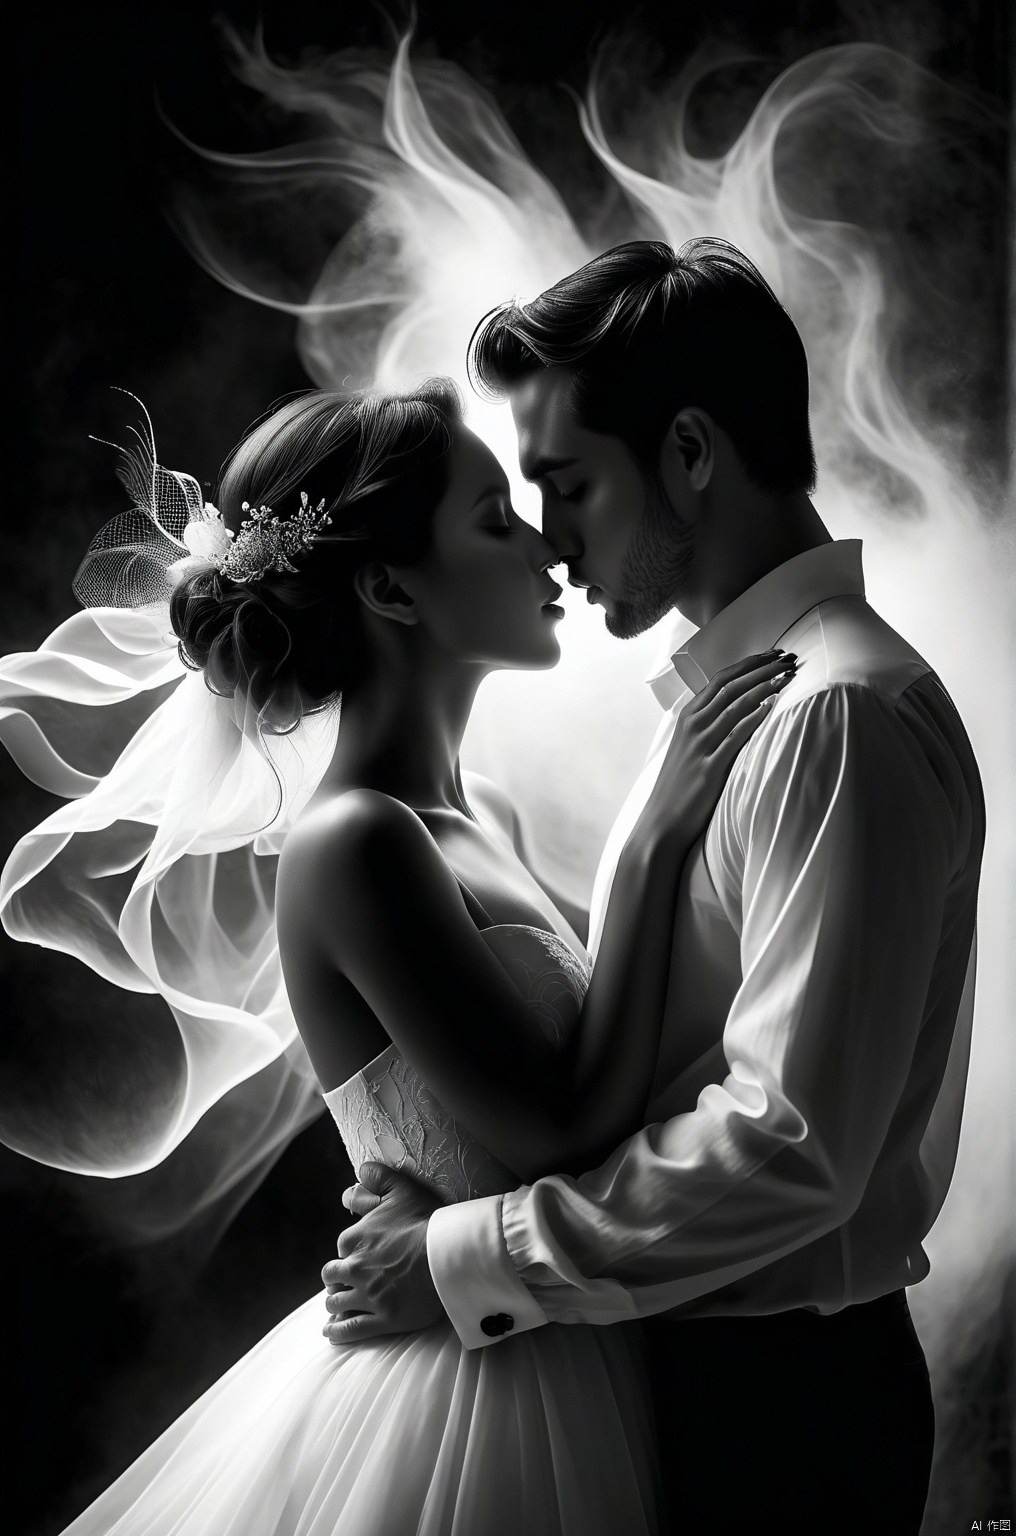 A couple embraced and kissed,  a sense of artdesign, ethereal phantom, lifelike,black and white tones,